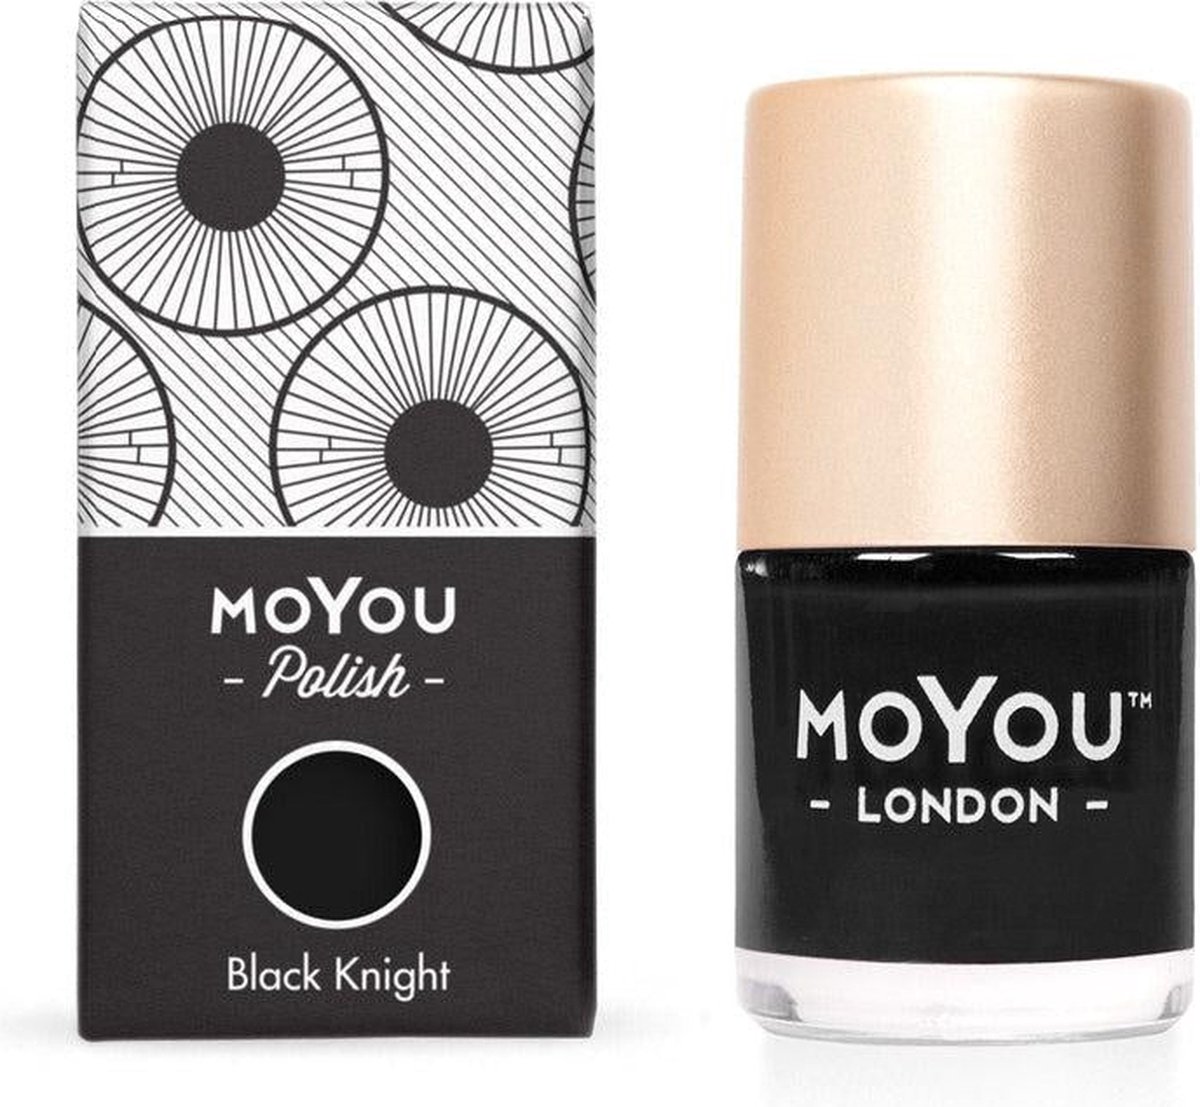 MoYou London - Nagellak voor Stempelen en Basis Kleur - Black Knight 9ml